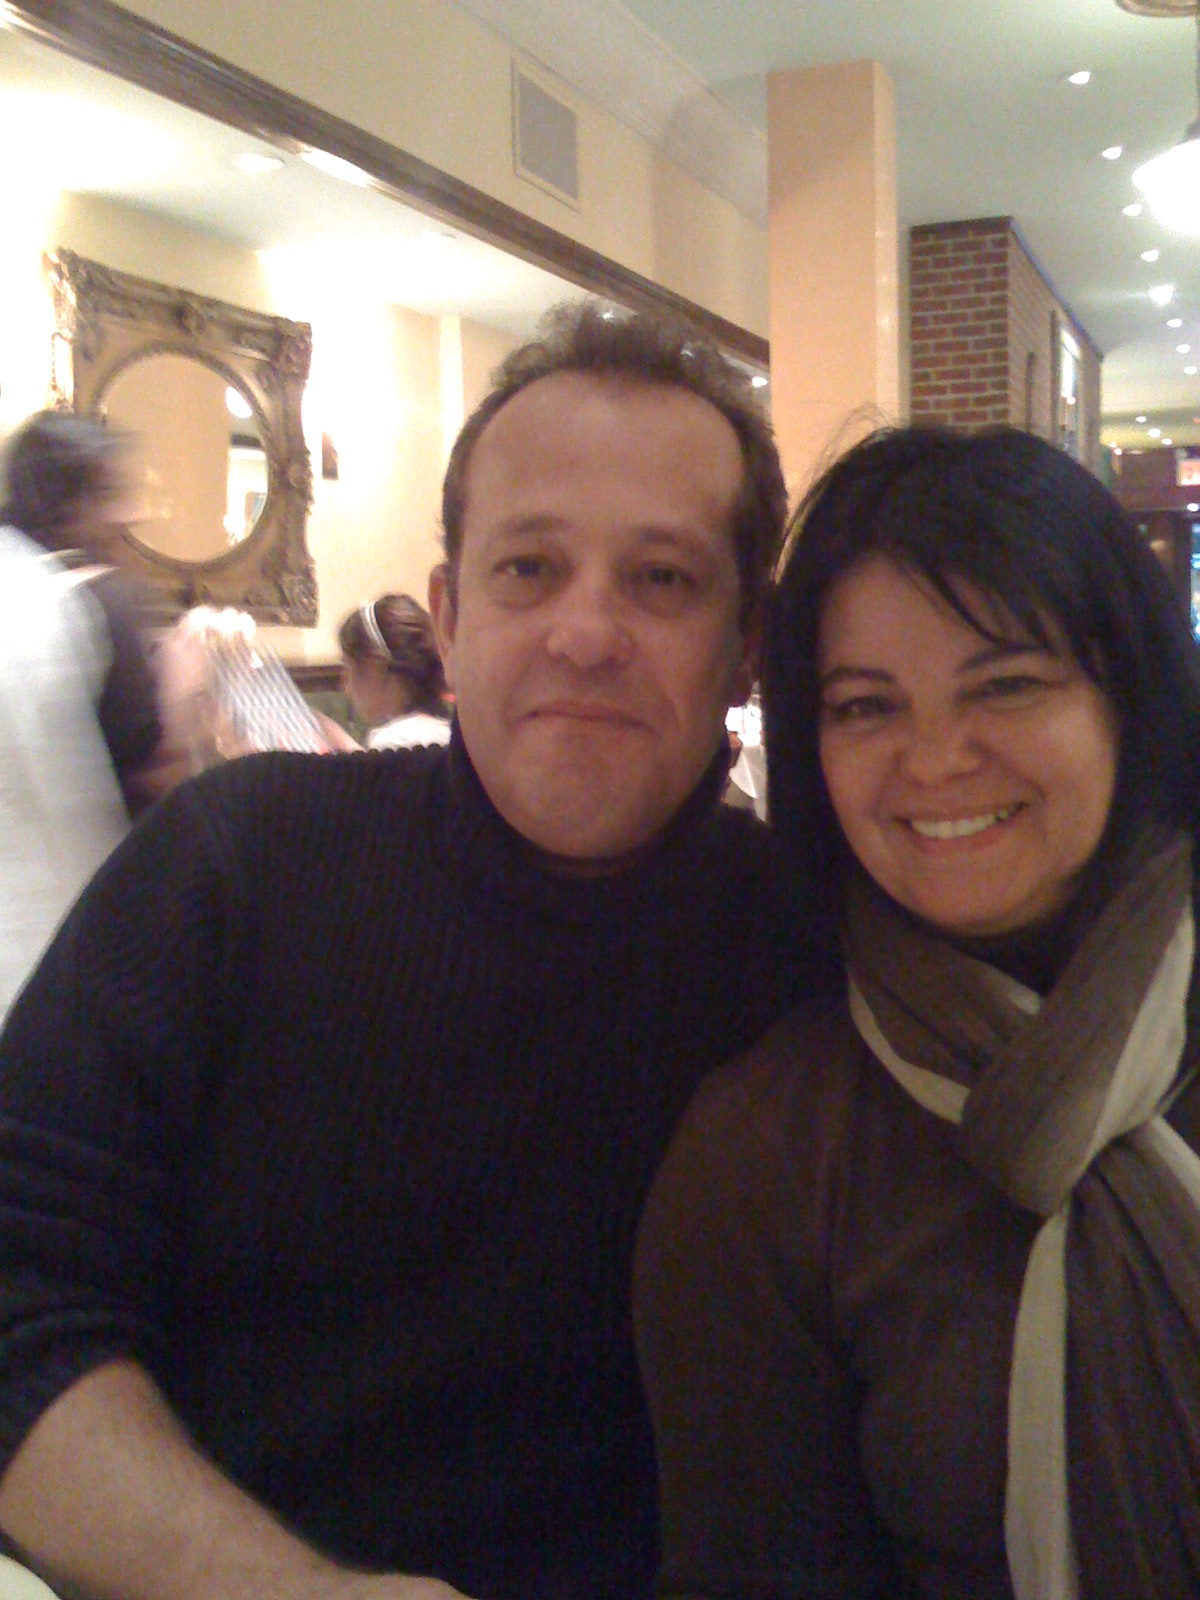 Rogerio and Helenice at Via Brasil restaurant in Manhattan